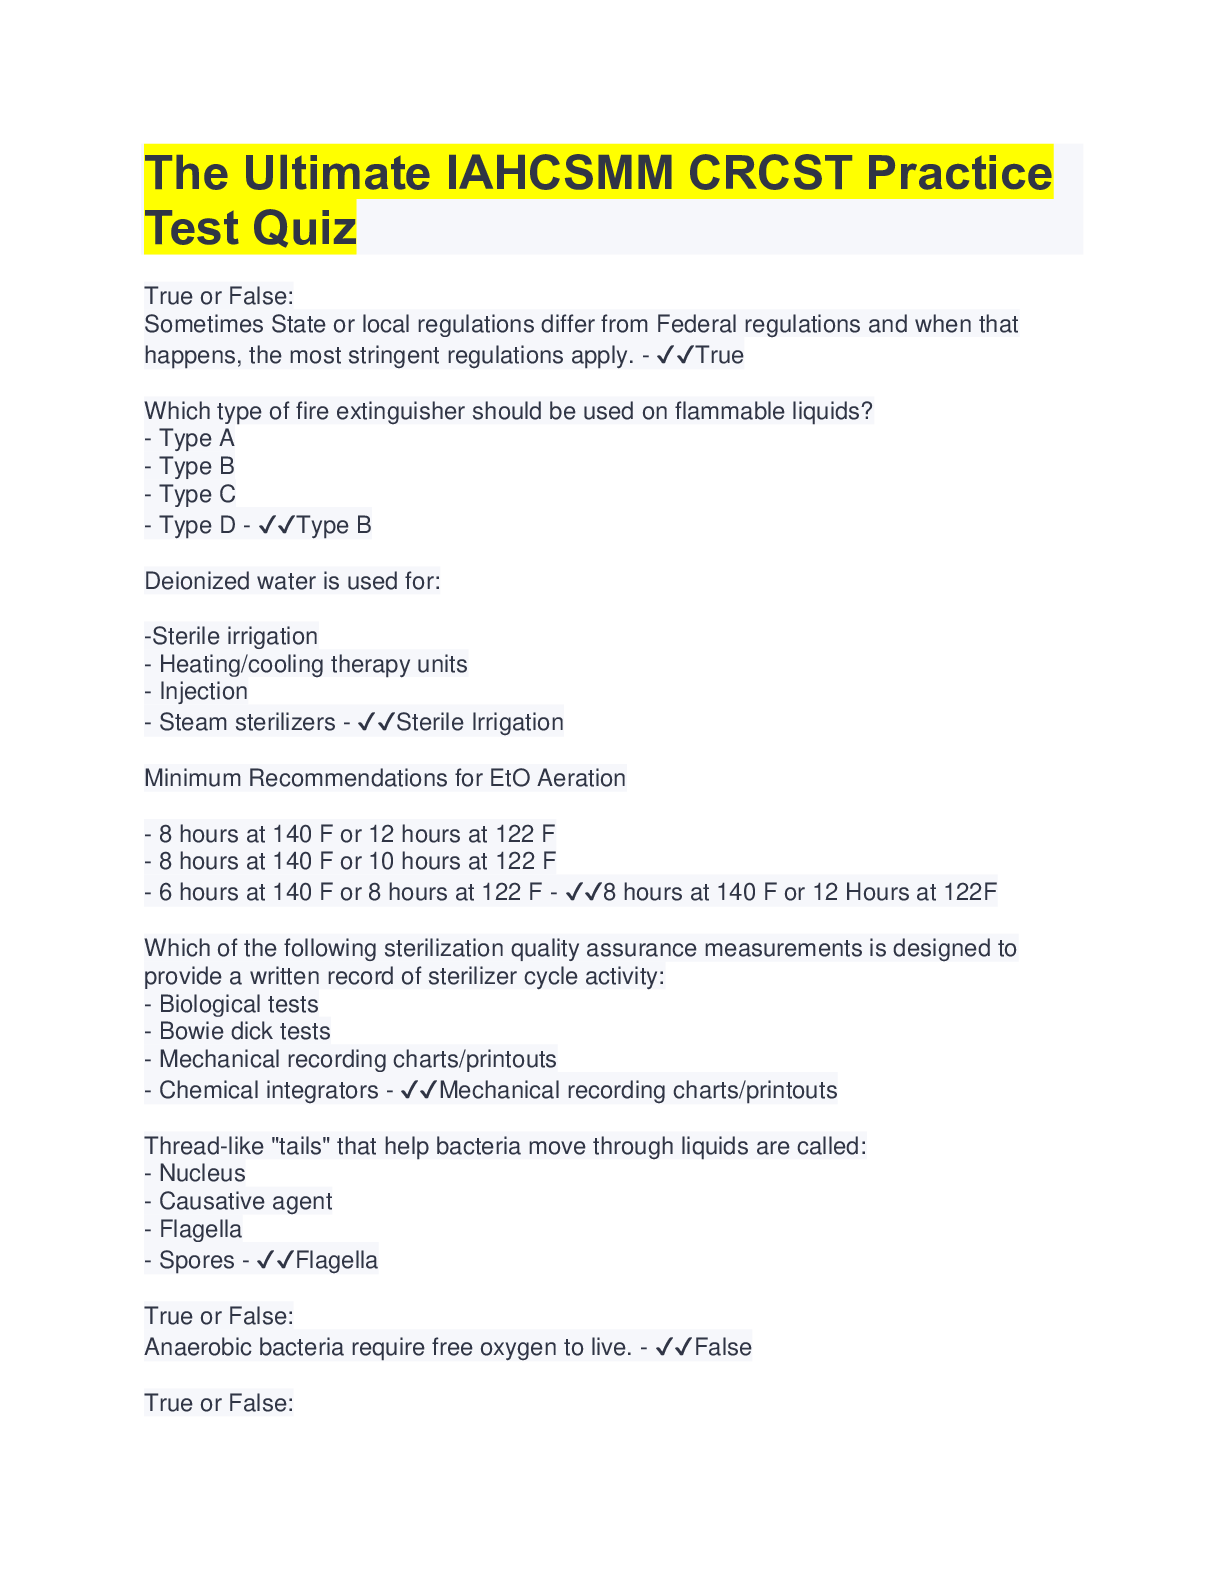 The Ultimate IAHCSMM CRCST Practice Test Quiz